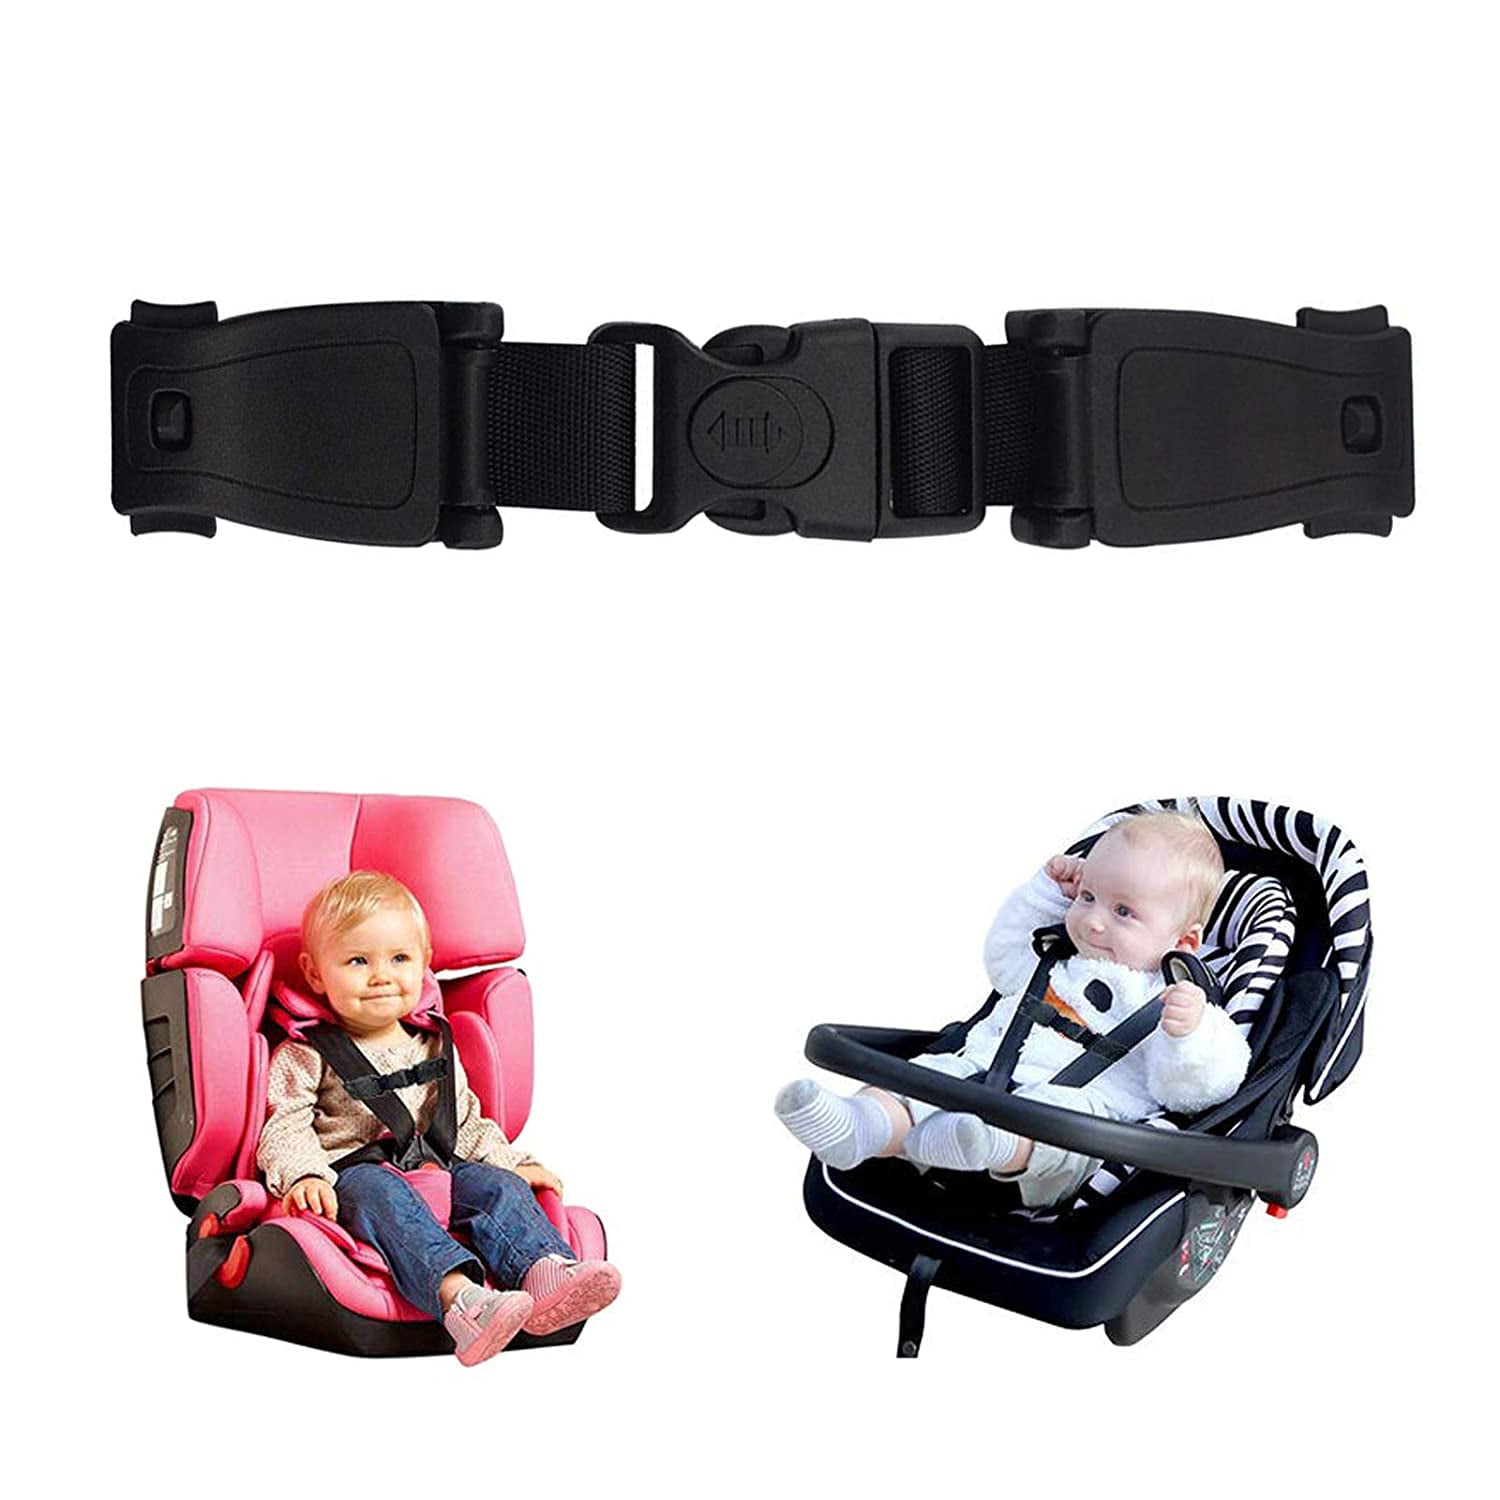 Hot Car Baby Safety Seat Strap Belt Harness Chest Child Clip Safe Buckle Black 